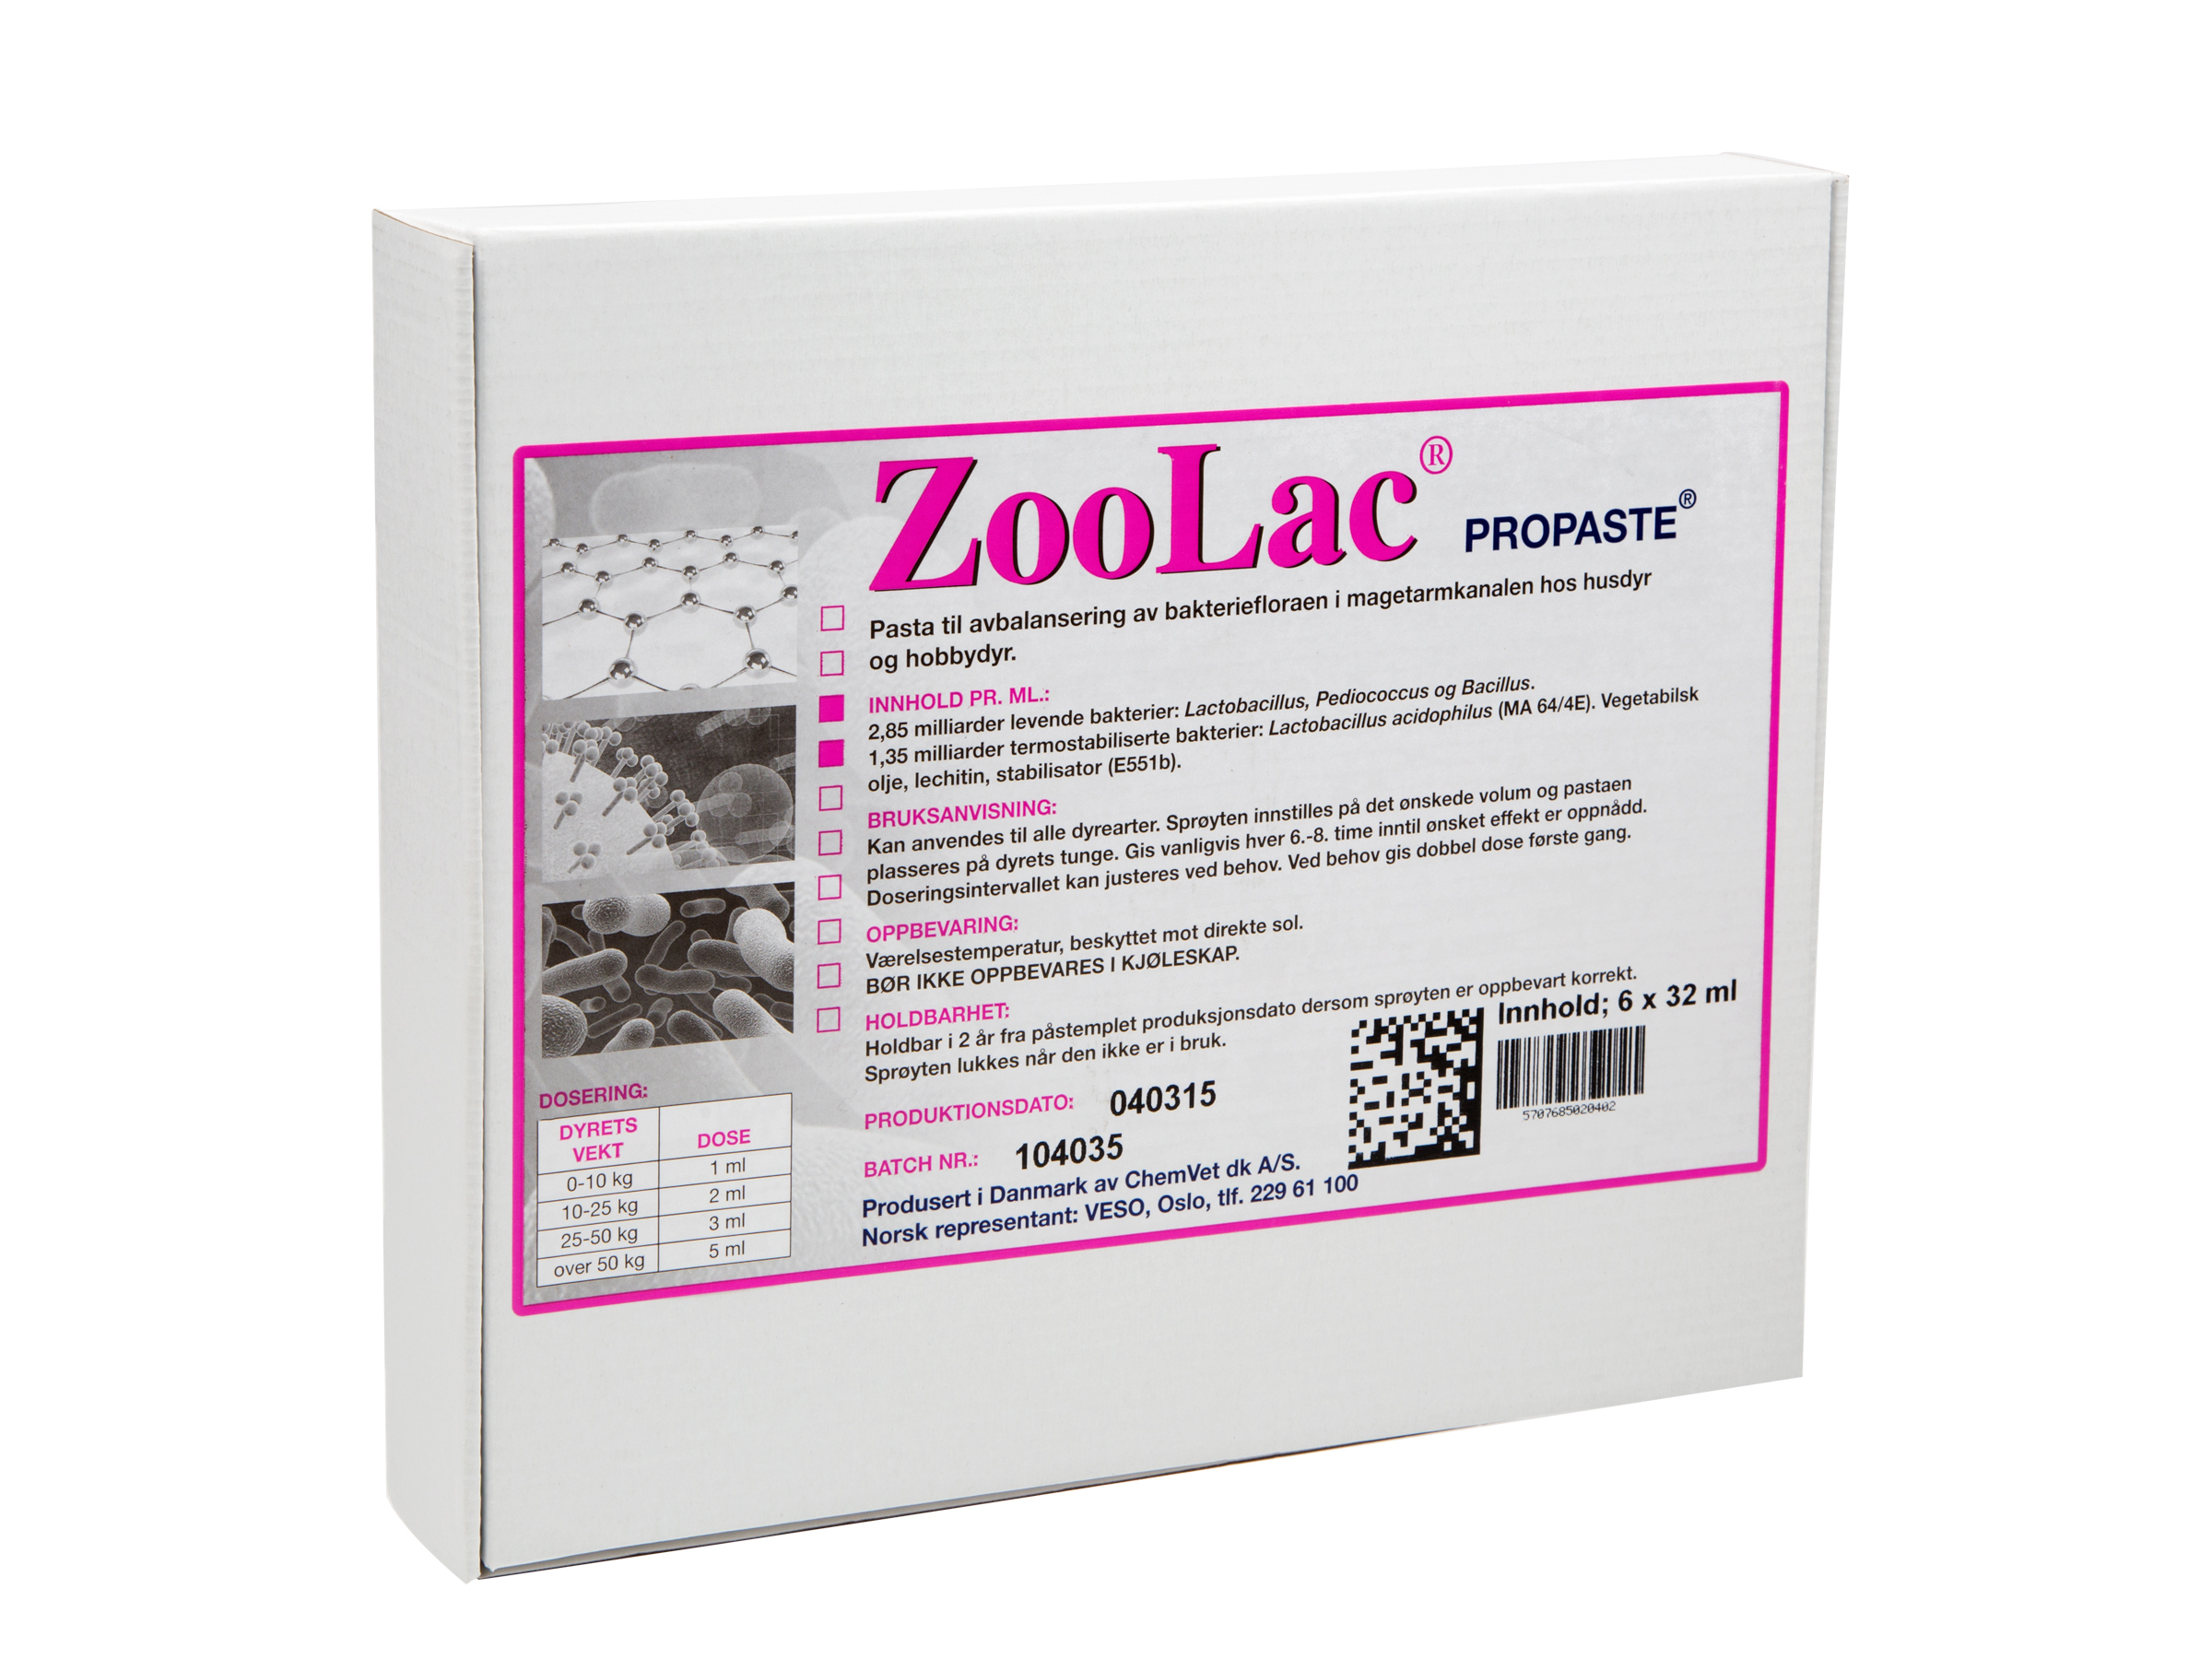 Zoolac Propaste, 6 x 32 ml